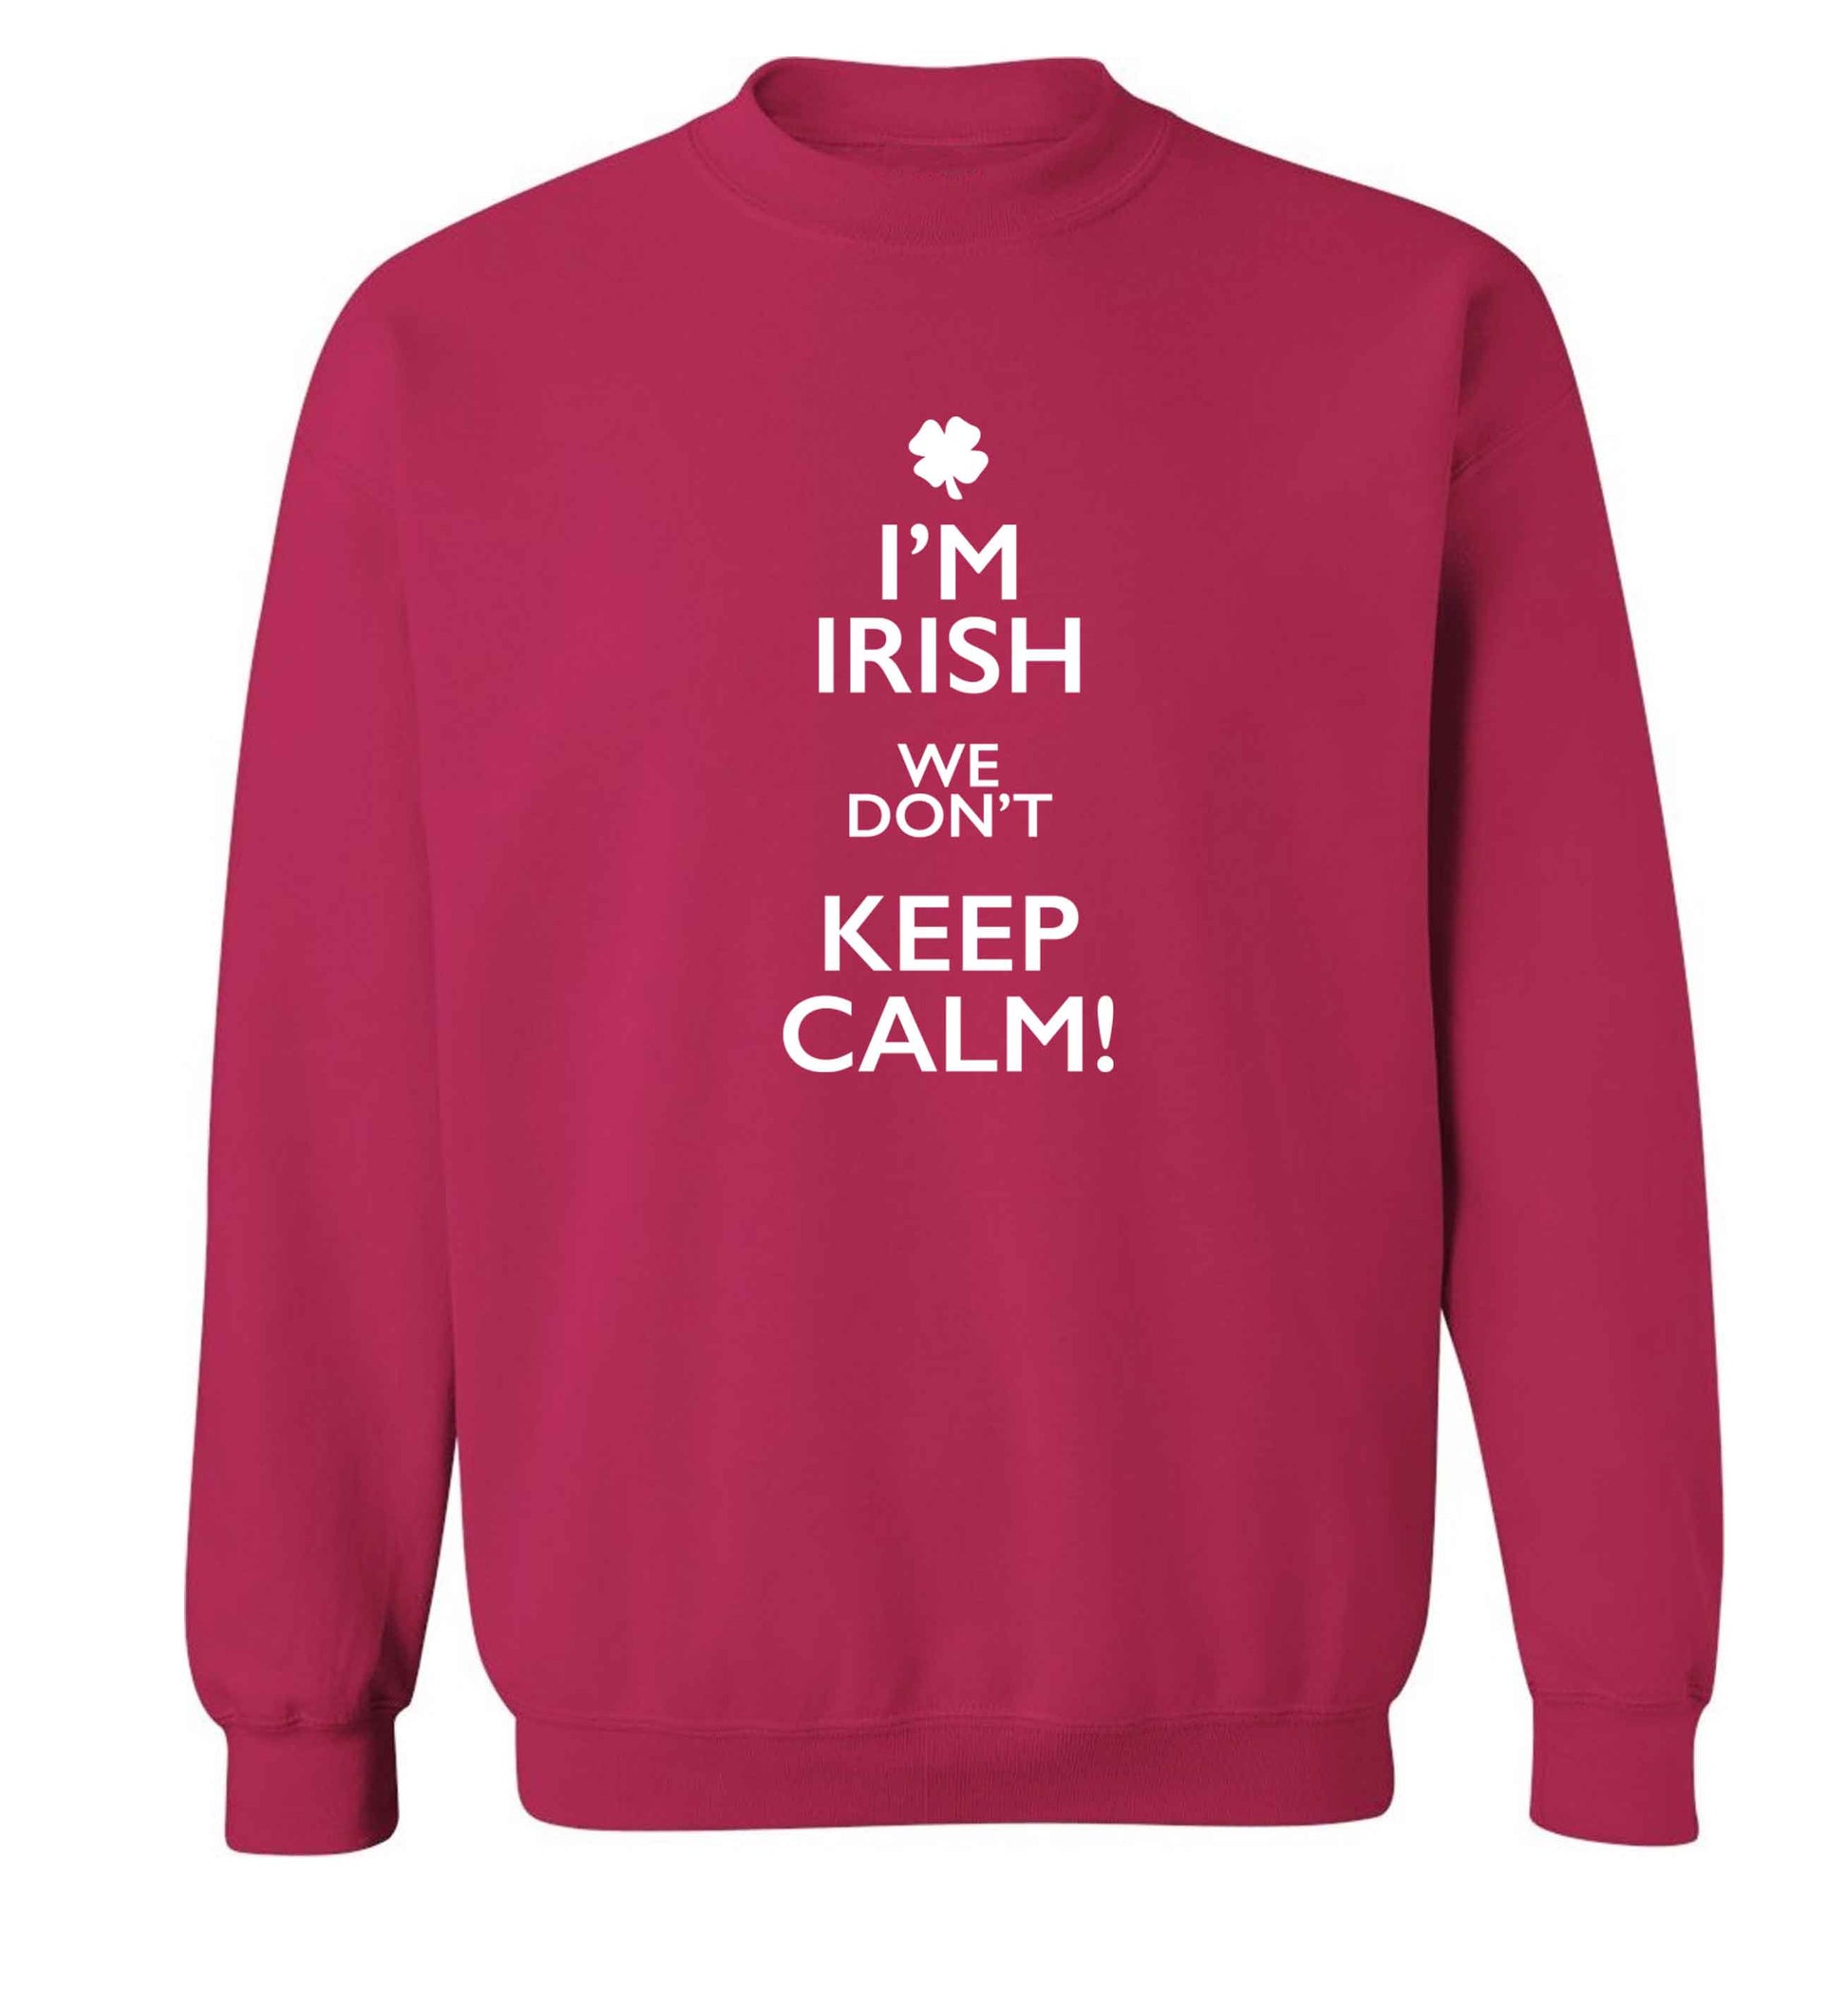 I'm Irish we don't keep calm adult's unisex pink sweater 2XL